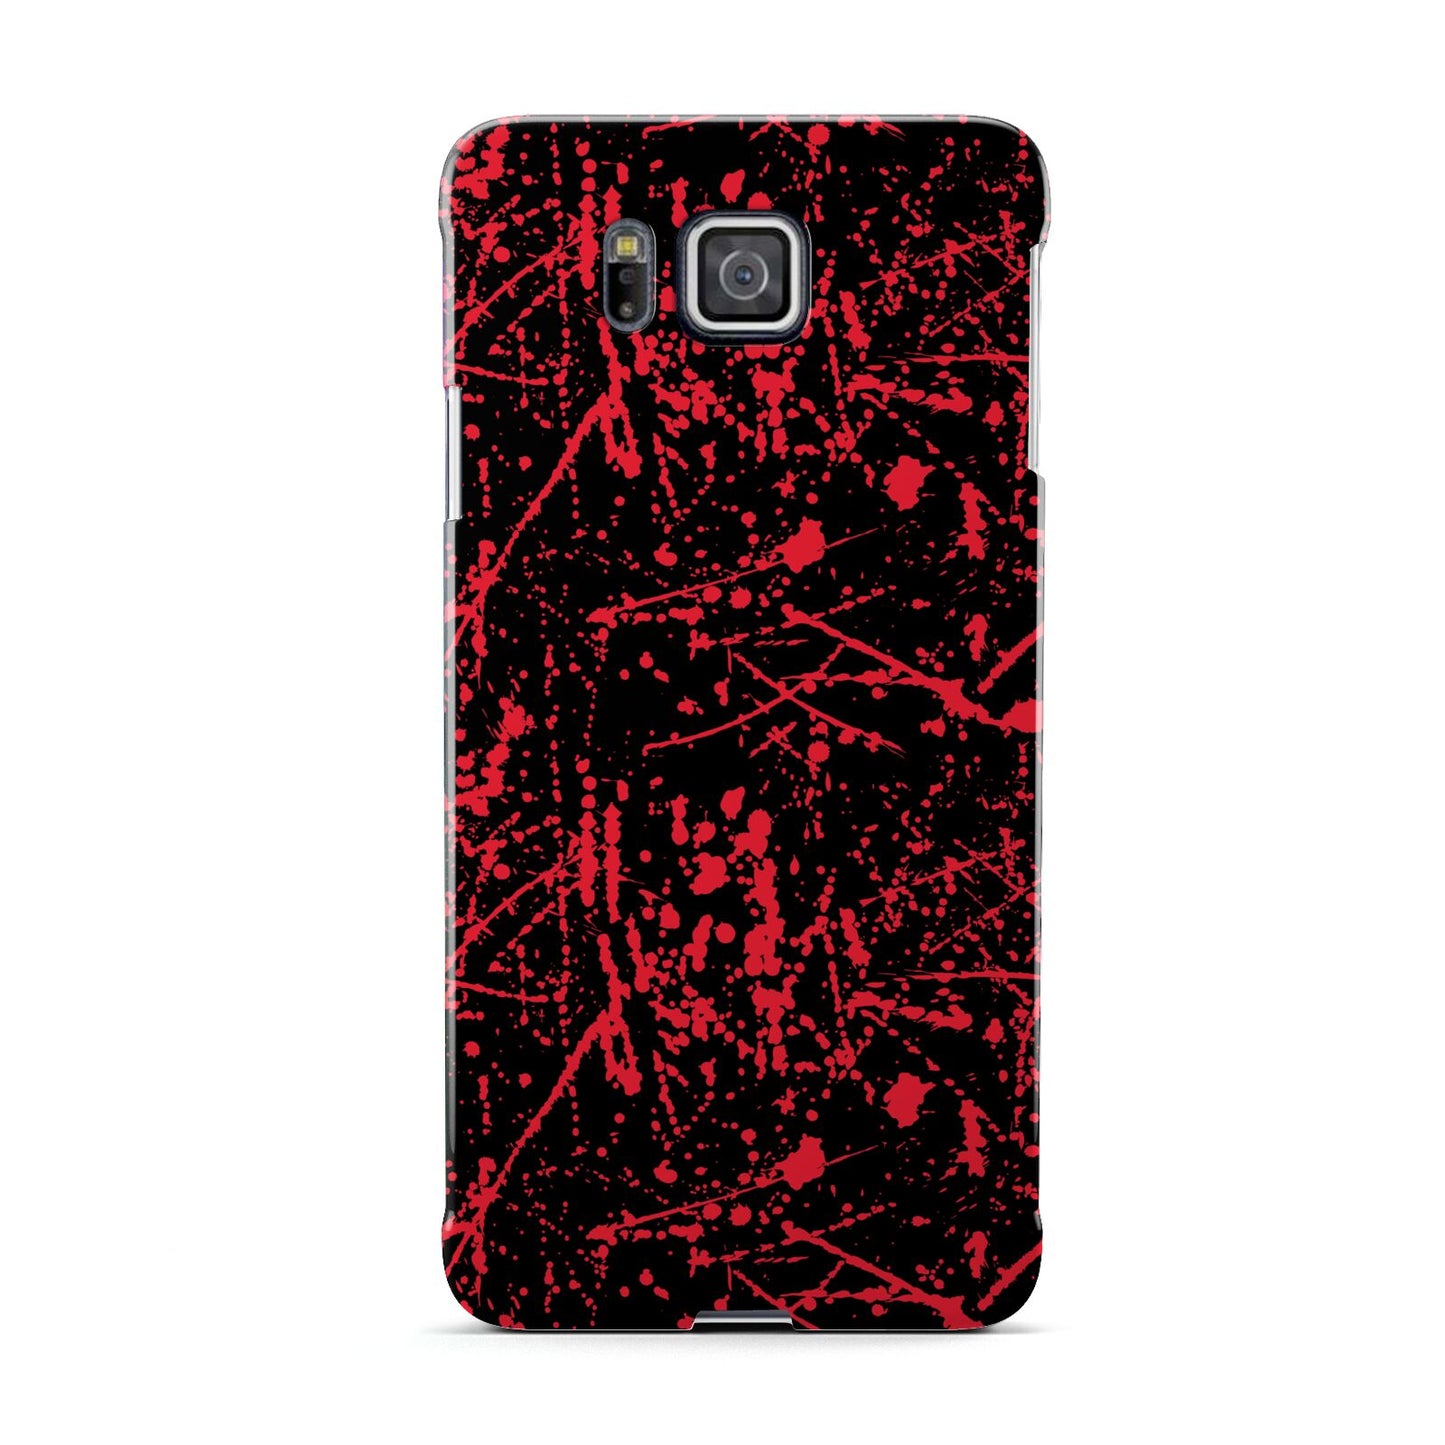 Blood Splatters Samsung Galaxy Alpha Case